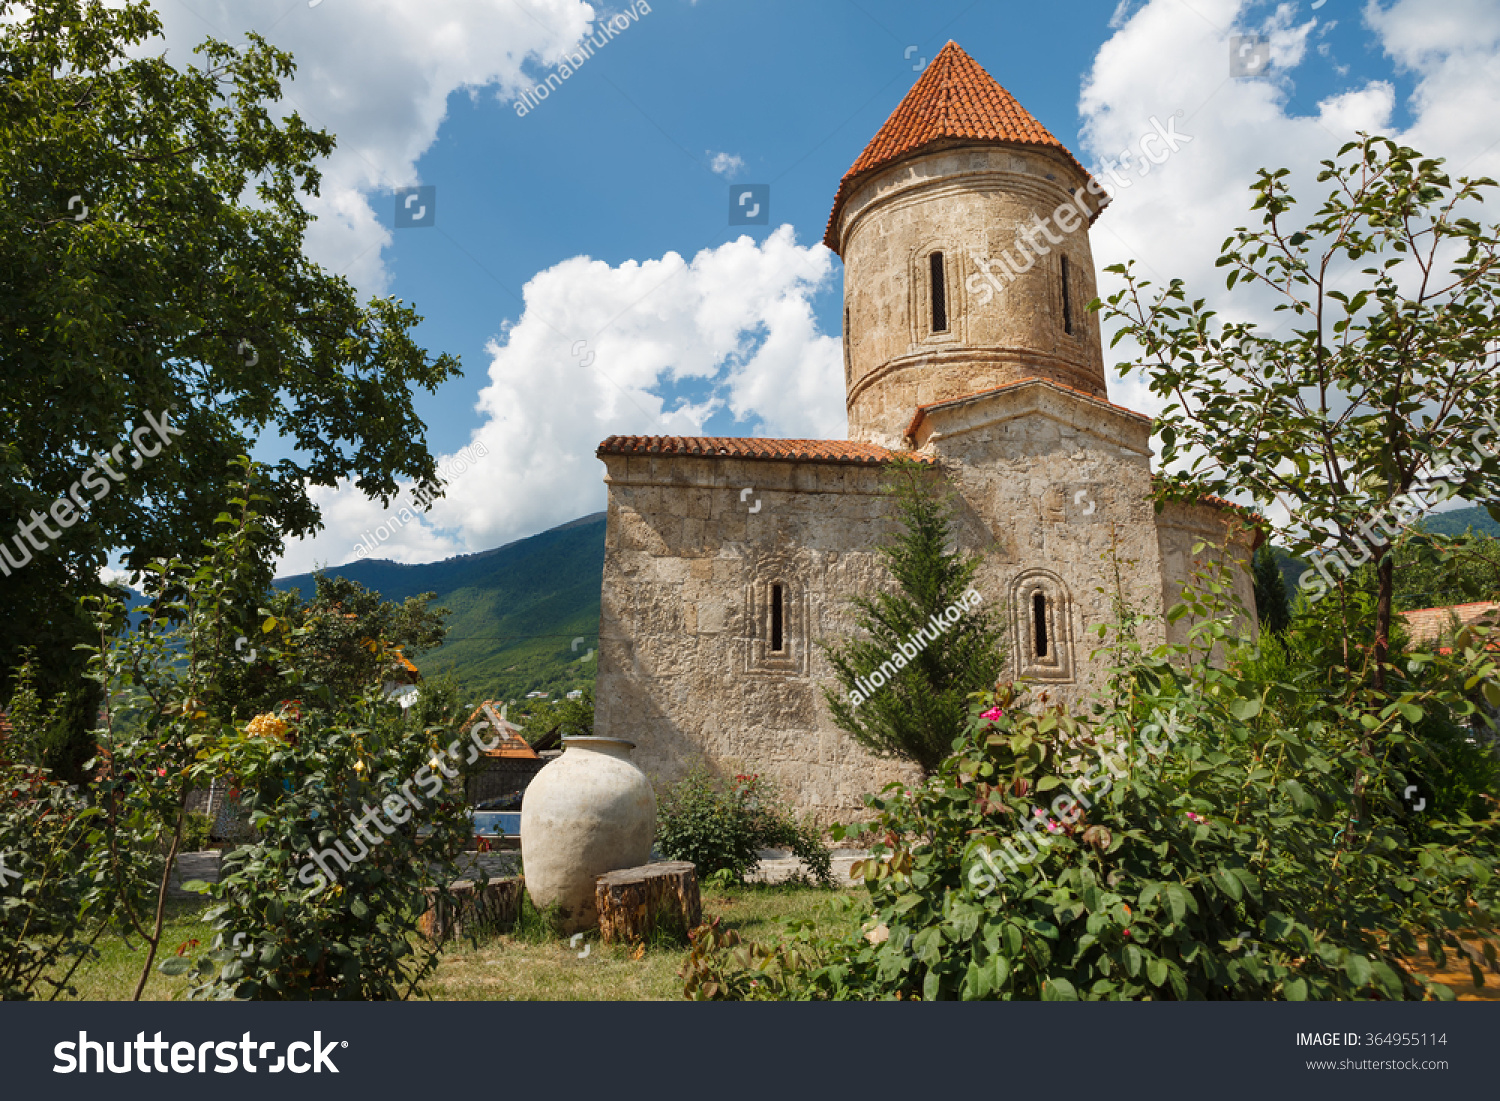 Old Albanian church temple in Kish province of Azerbaijan #364955114